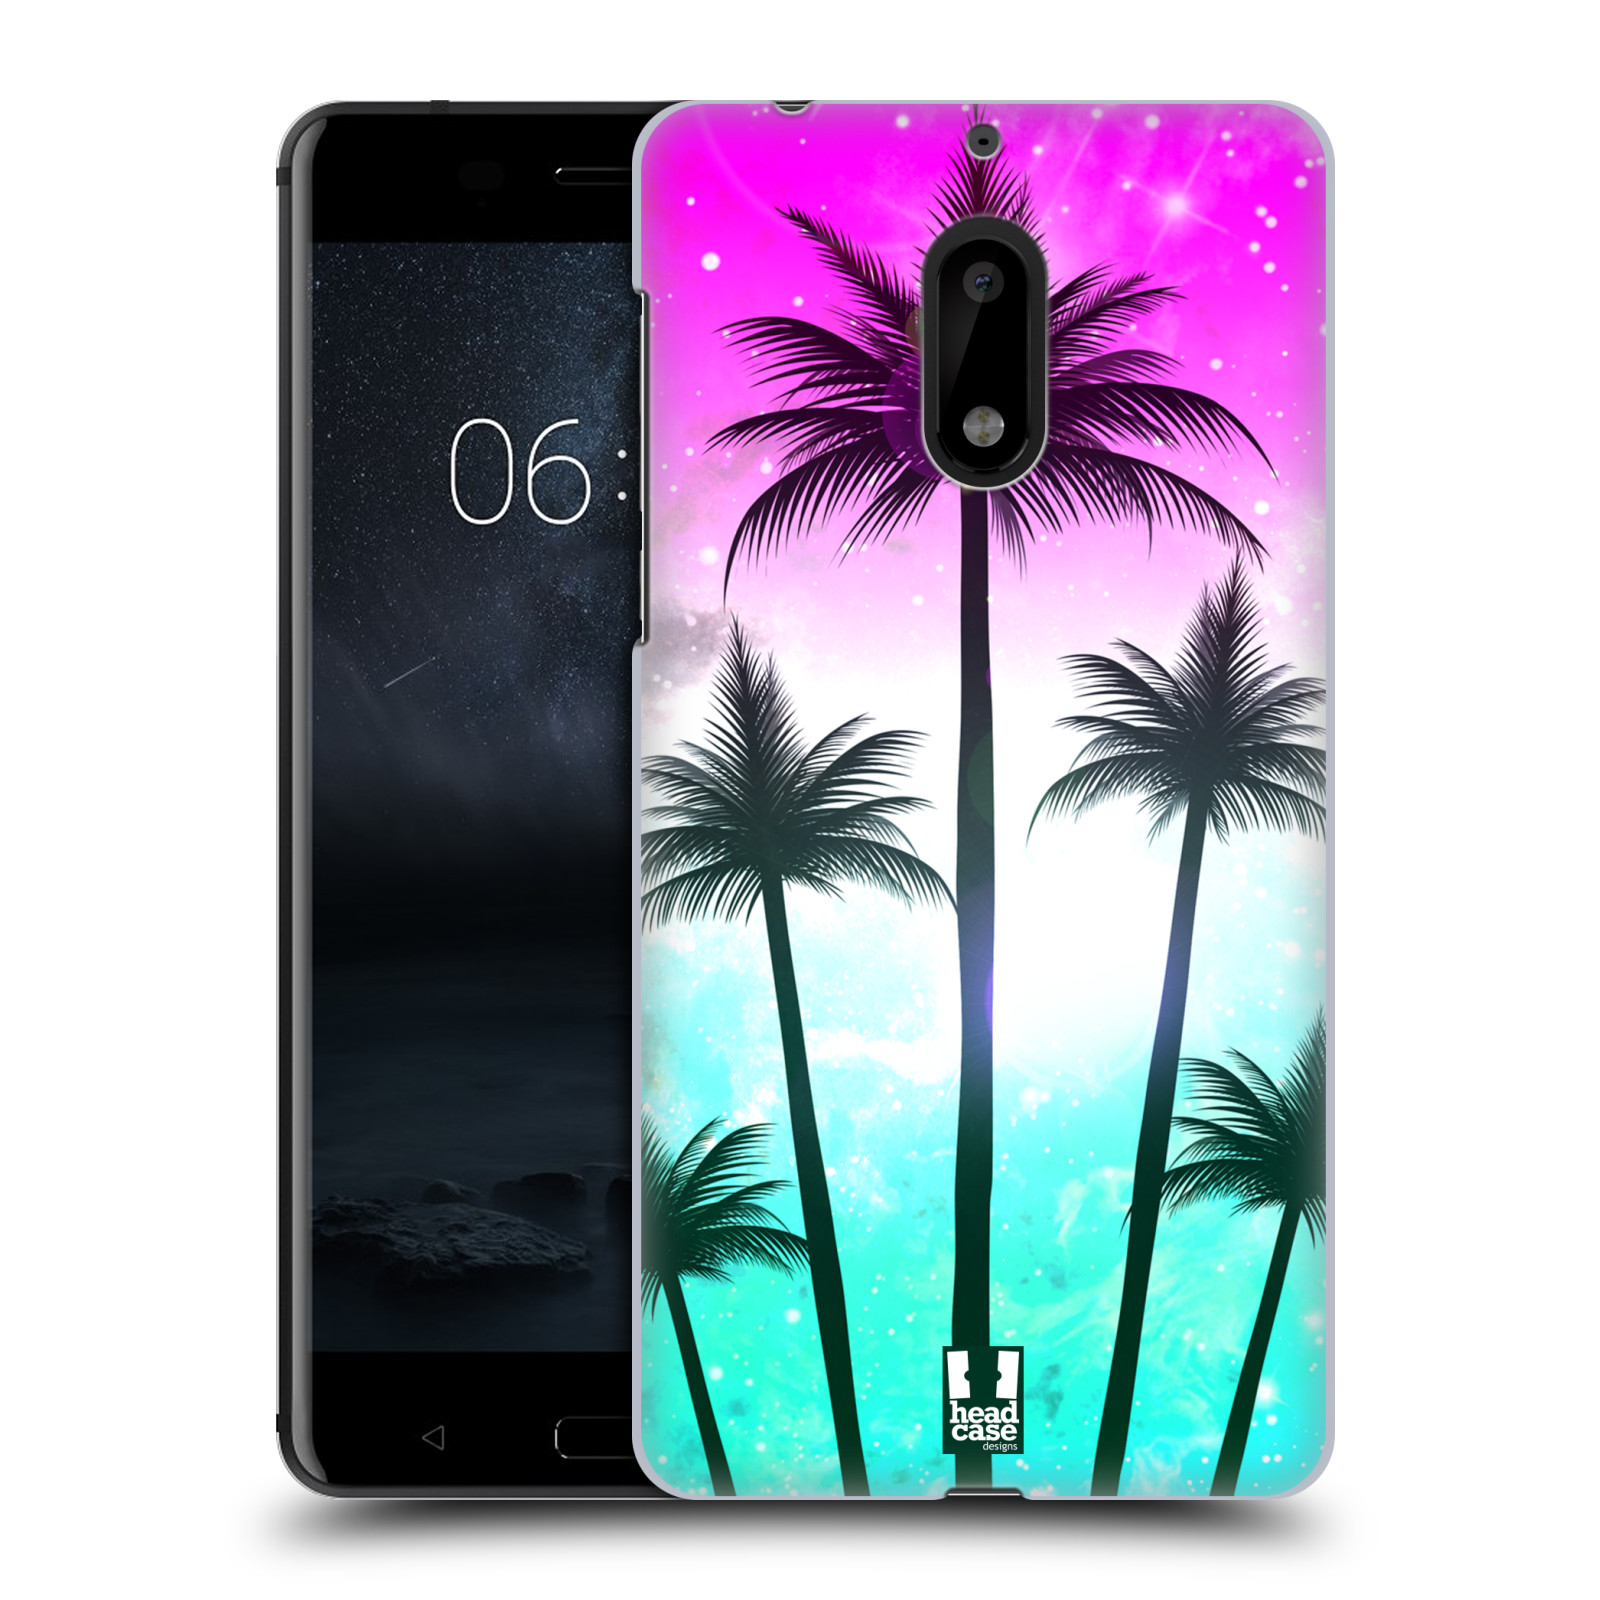 HEAD CASE plastový obal na mobil Nokia 6 vzor Kreslený motiv silueta moře a palmy RŮŽOVÁ A TYRKYS